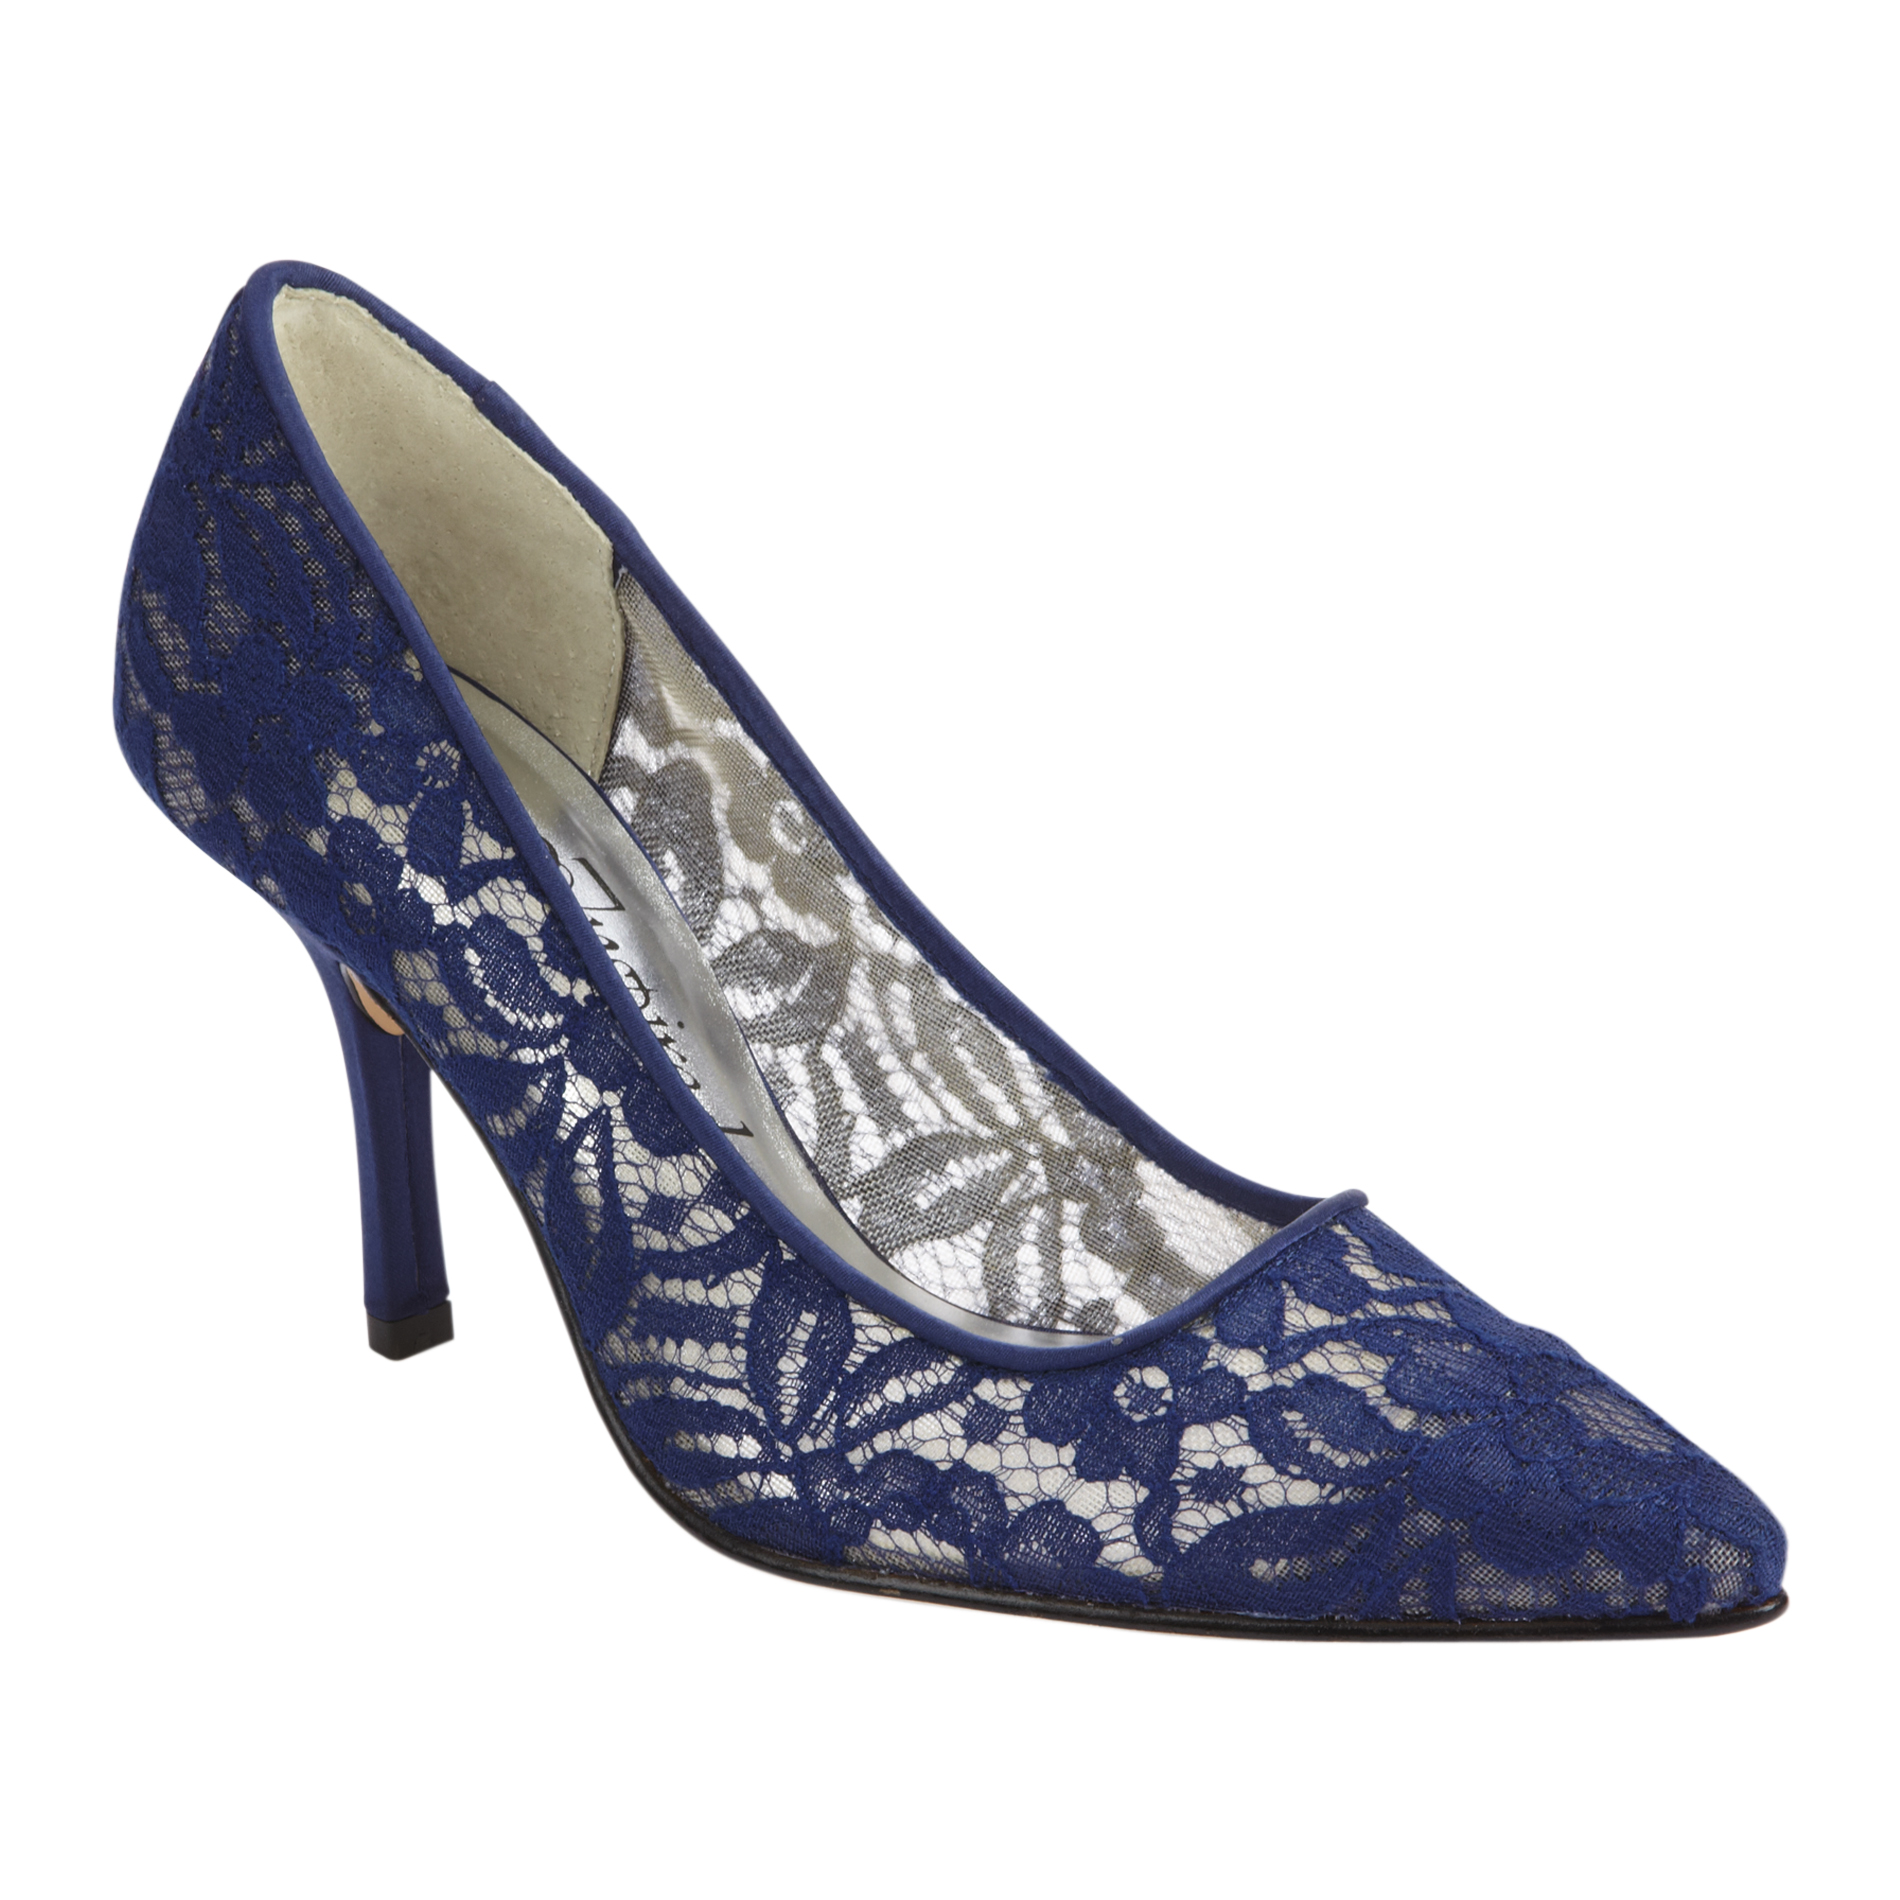 Inspired by Caparros Women's Dress Shoe Divine - True Blue